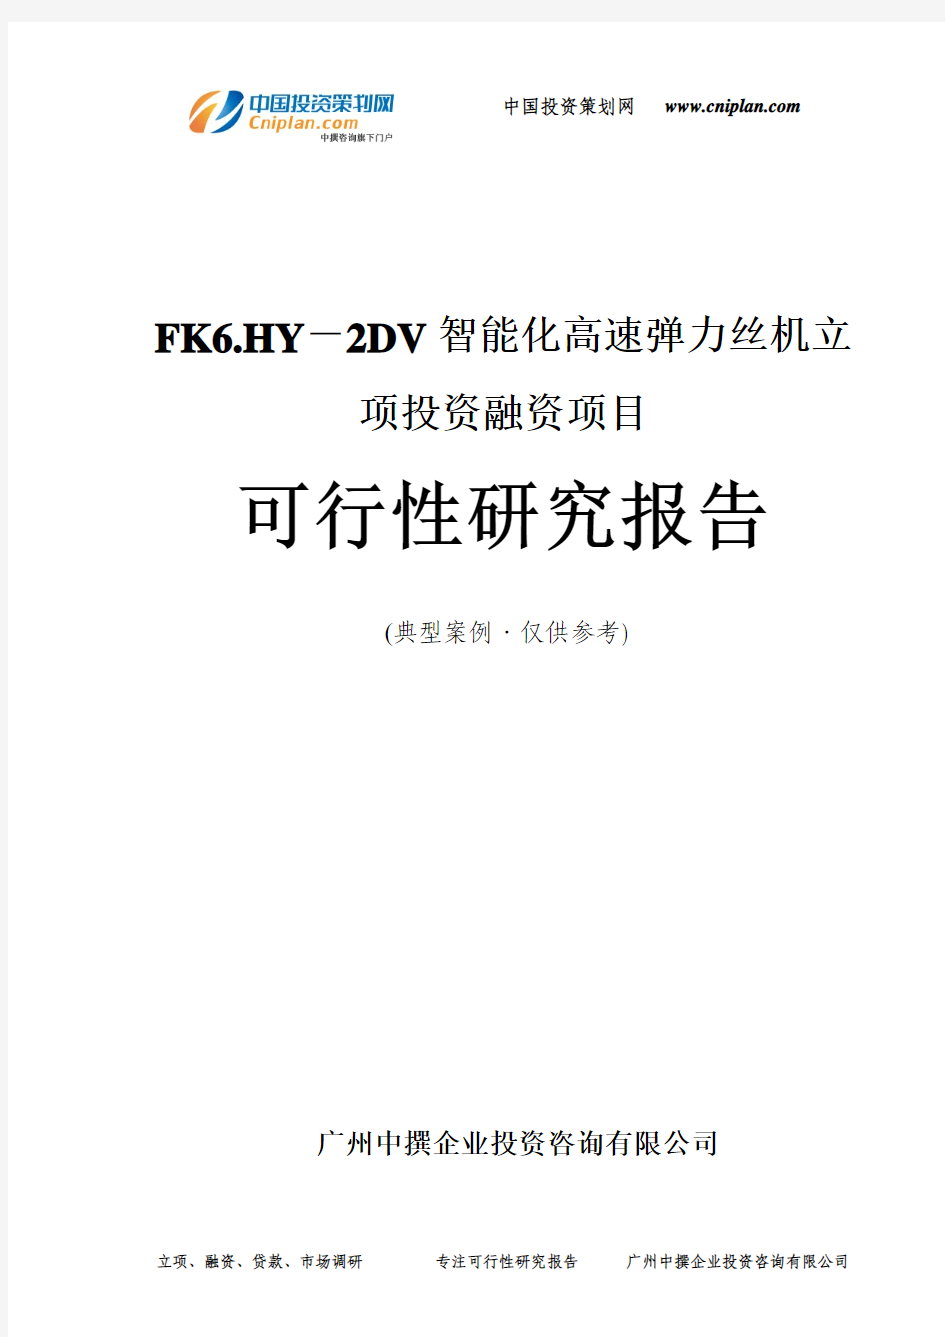 FK6.HY-2DV智能化高速弹力丝机融资投资立项项目可行性研究报告(中撰咨询)